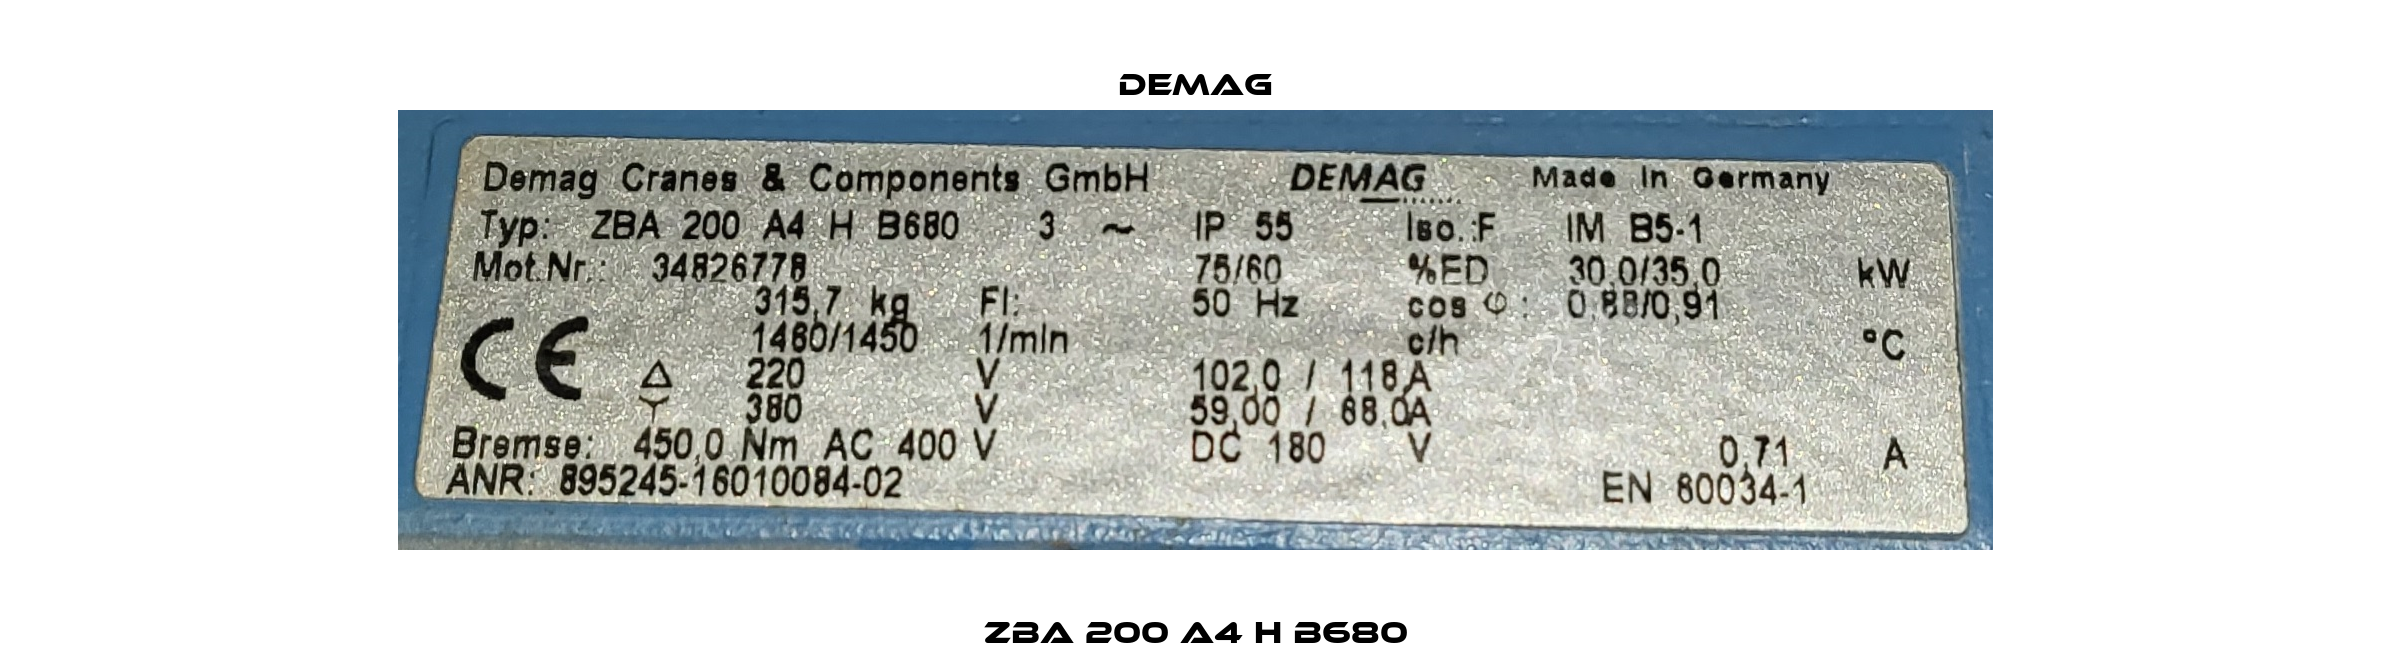 ZBA 200 A4 H B680 Demag